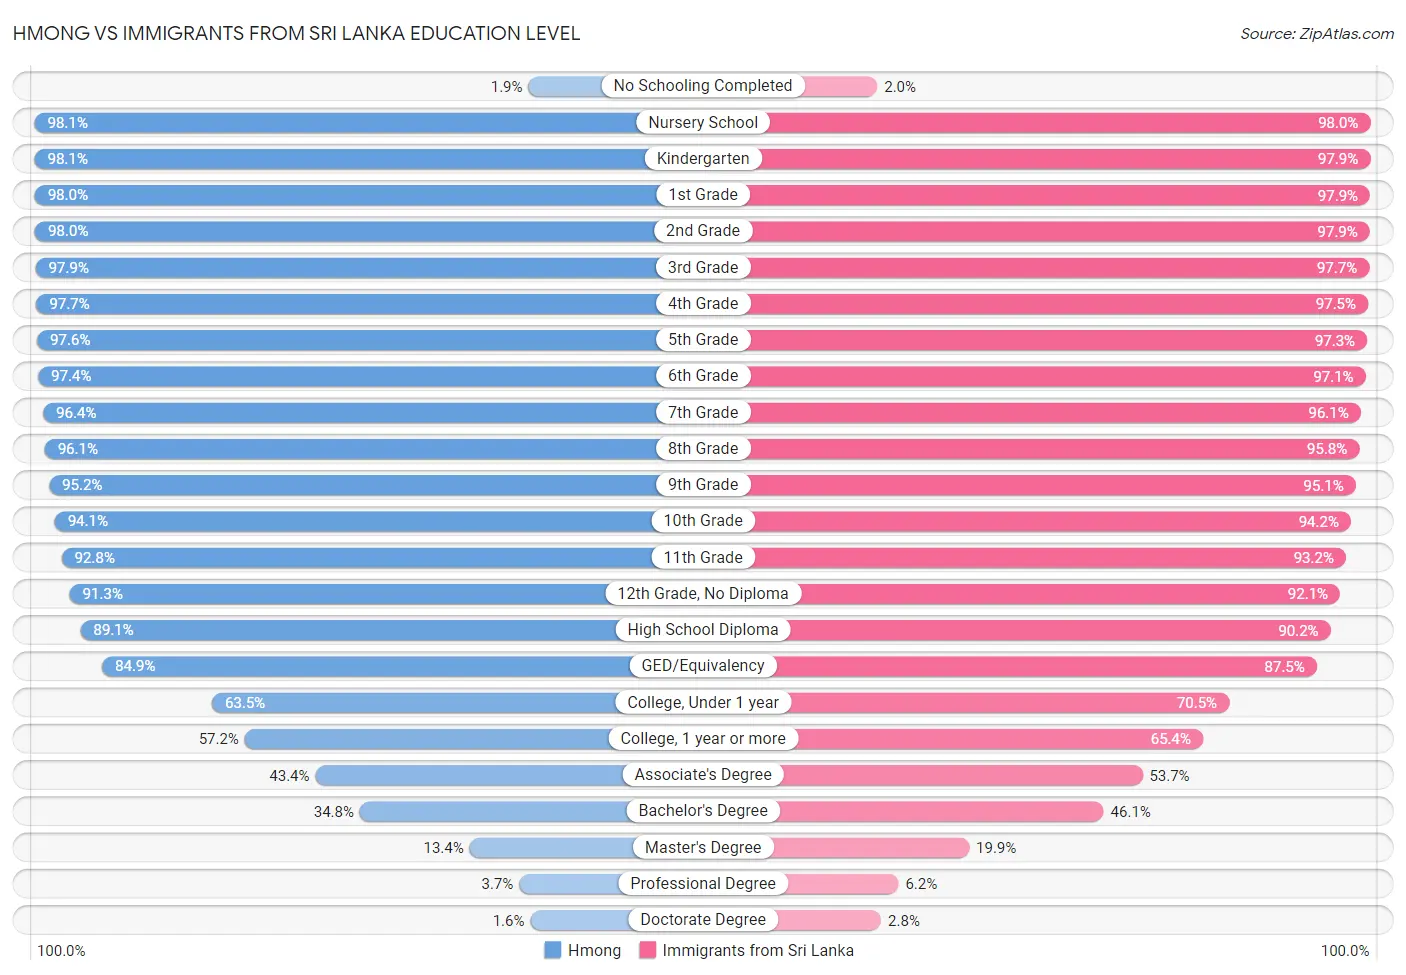 Hmong vs Immigrants from Sri Lanka Education Level